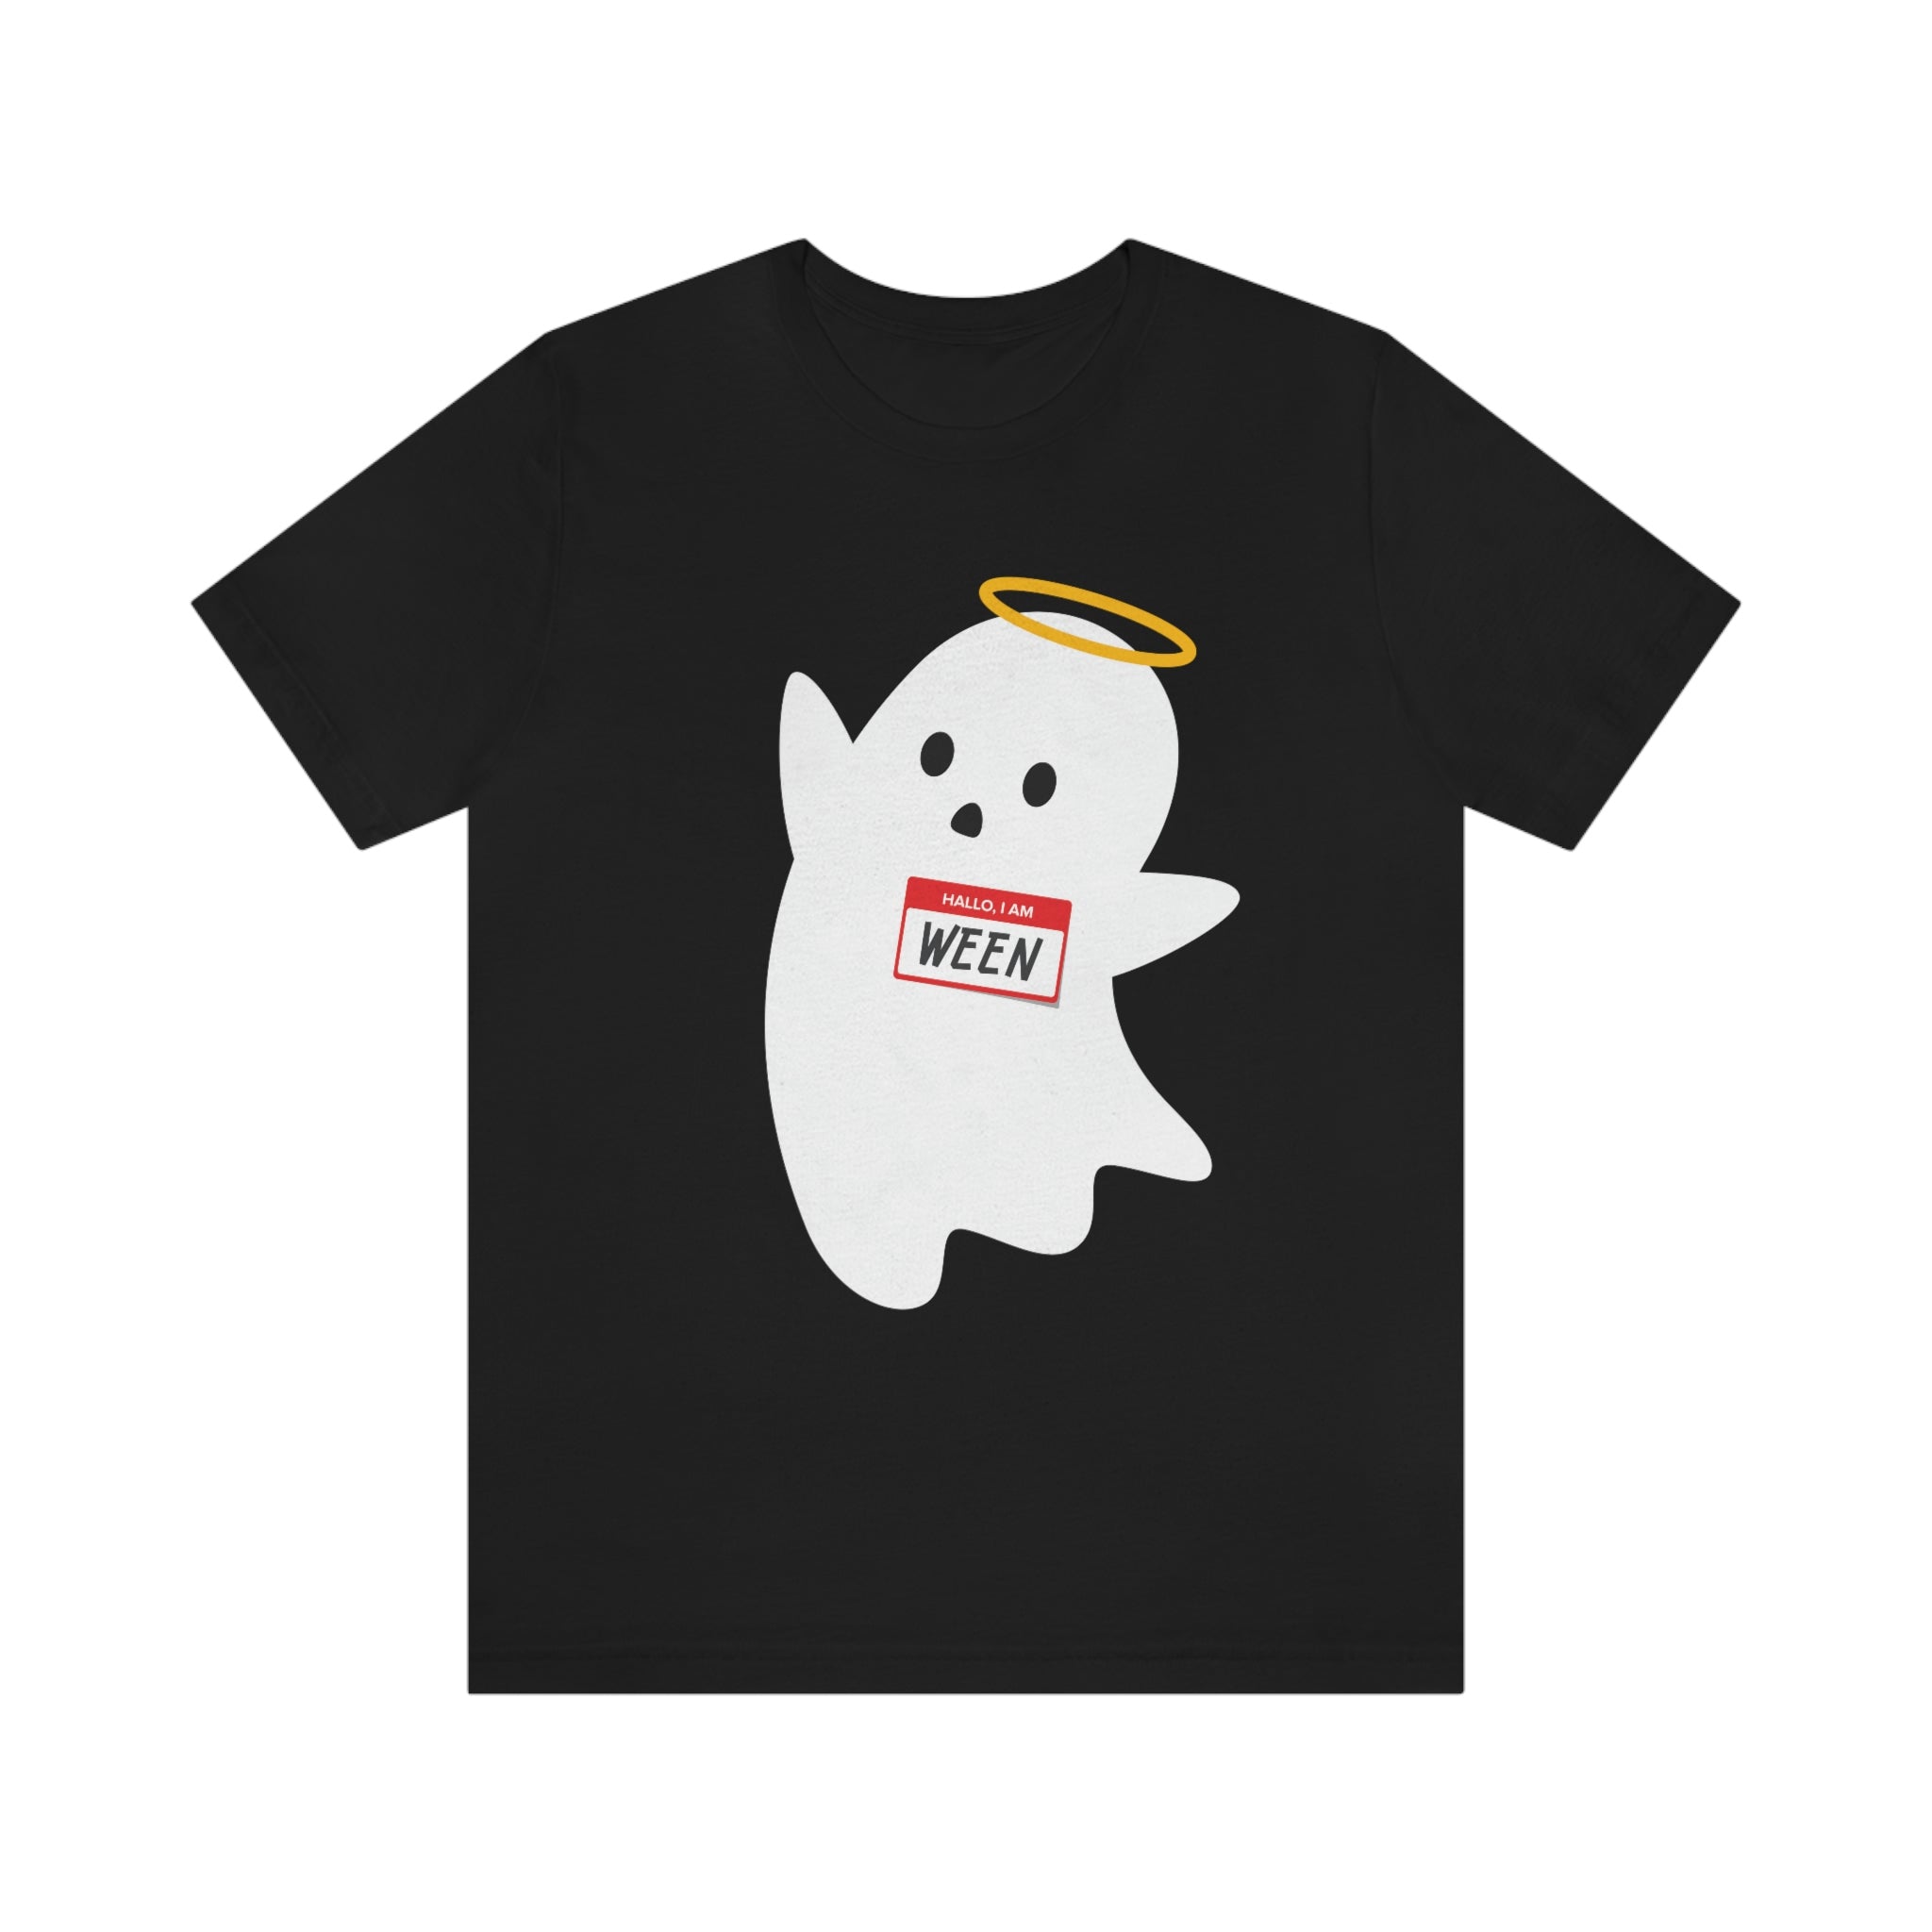 Wholesome Ween : Unisex 100% Premium Cotton T-Shirt - Happy Halloween Guy is Happy!